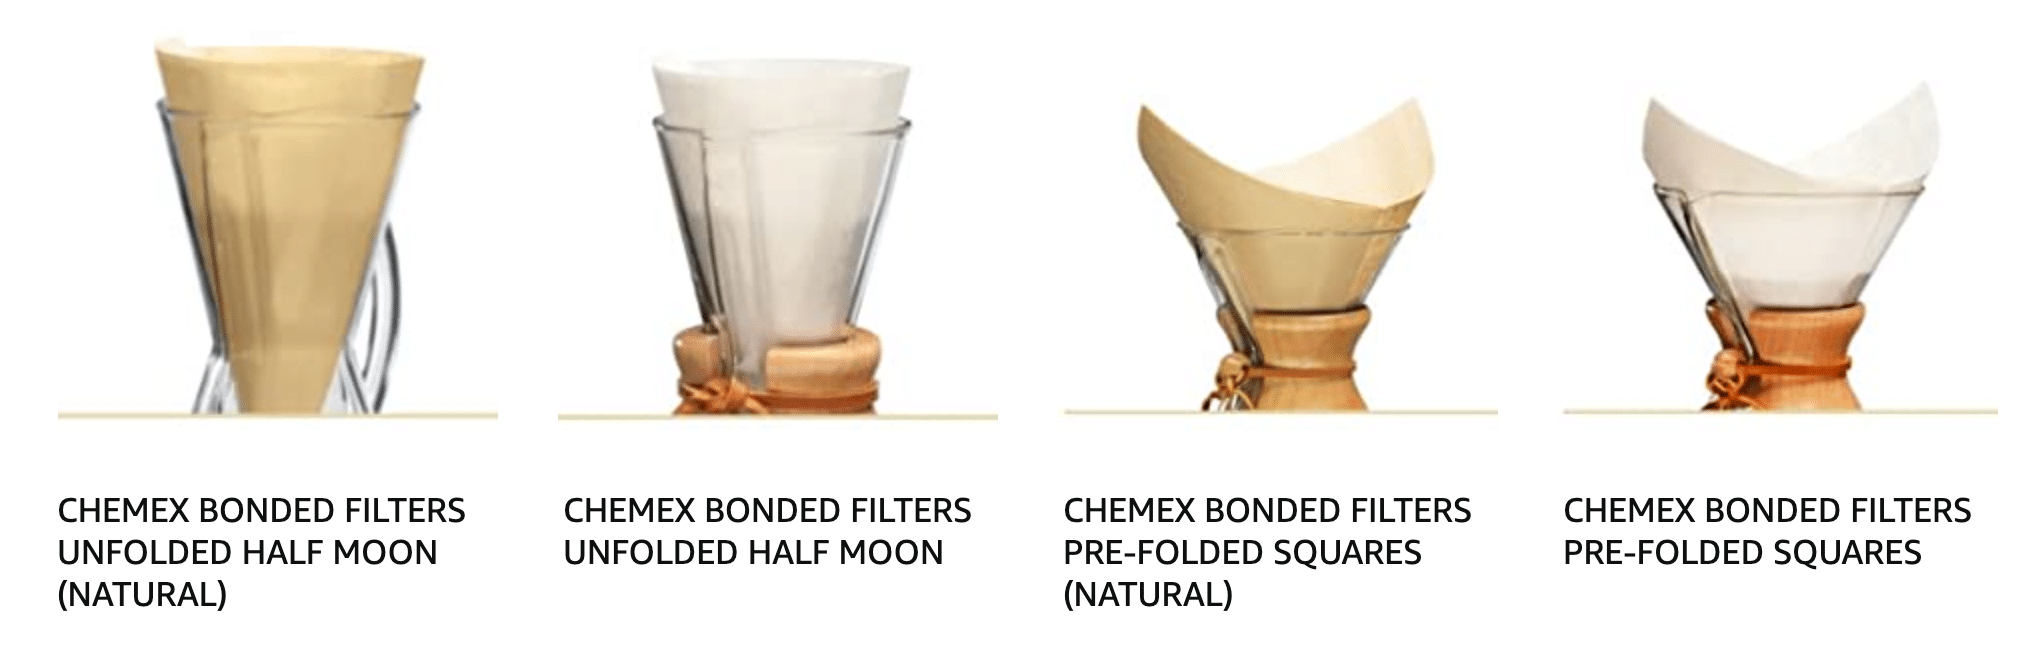 Chemex’s original filters